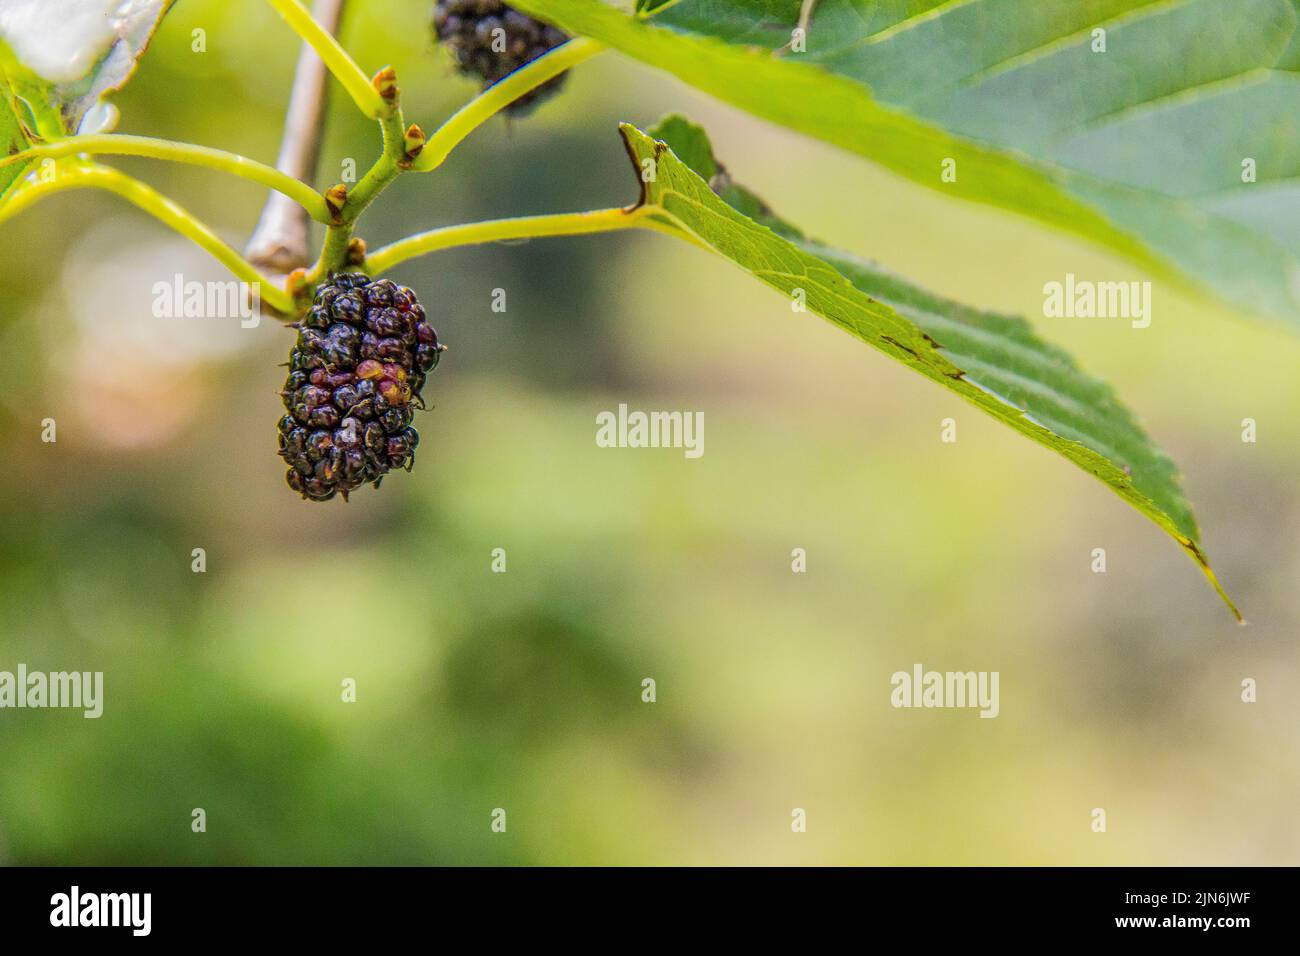 blackberry in the Brazilian foot Stock Photo